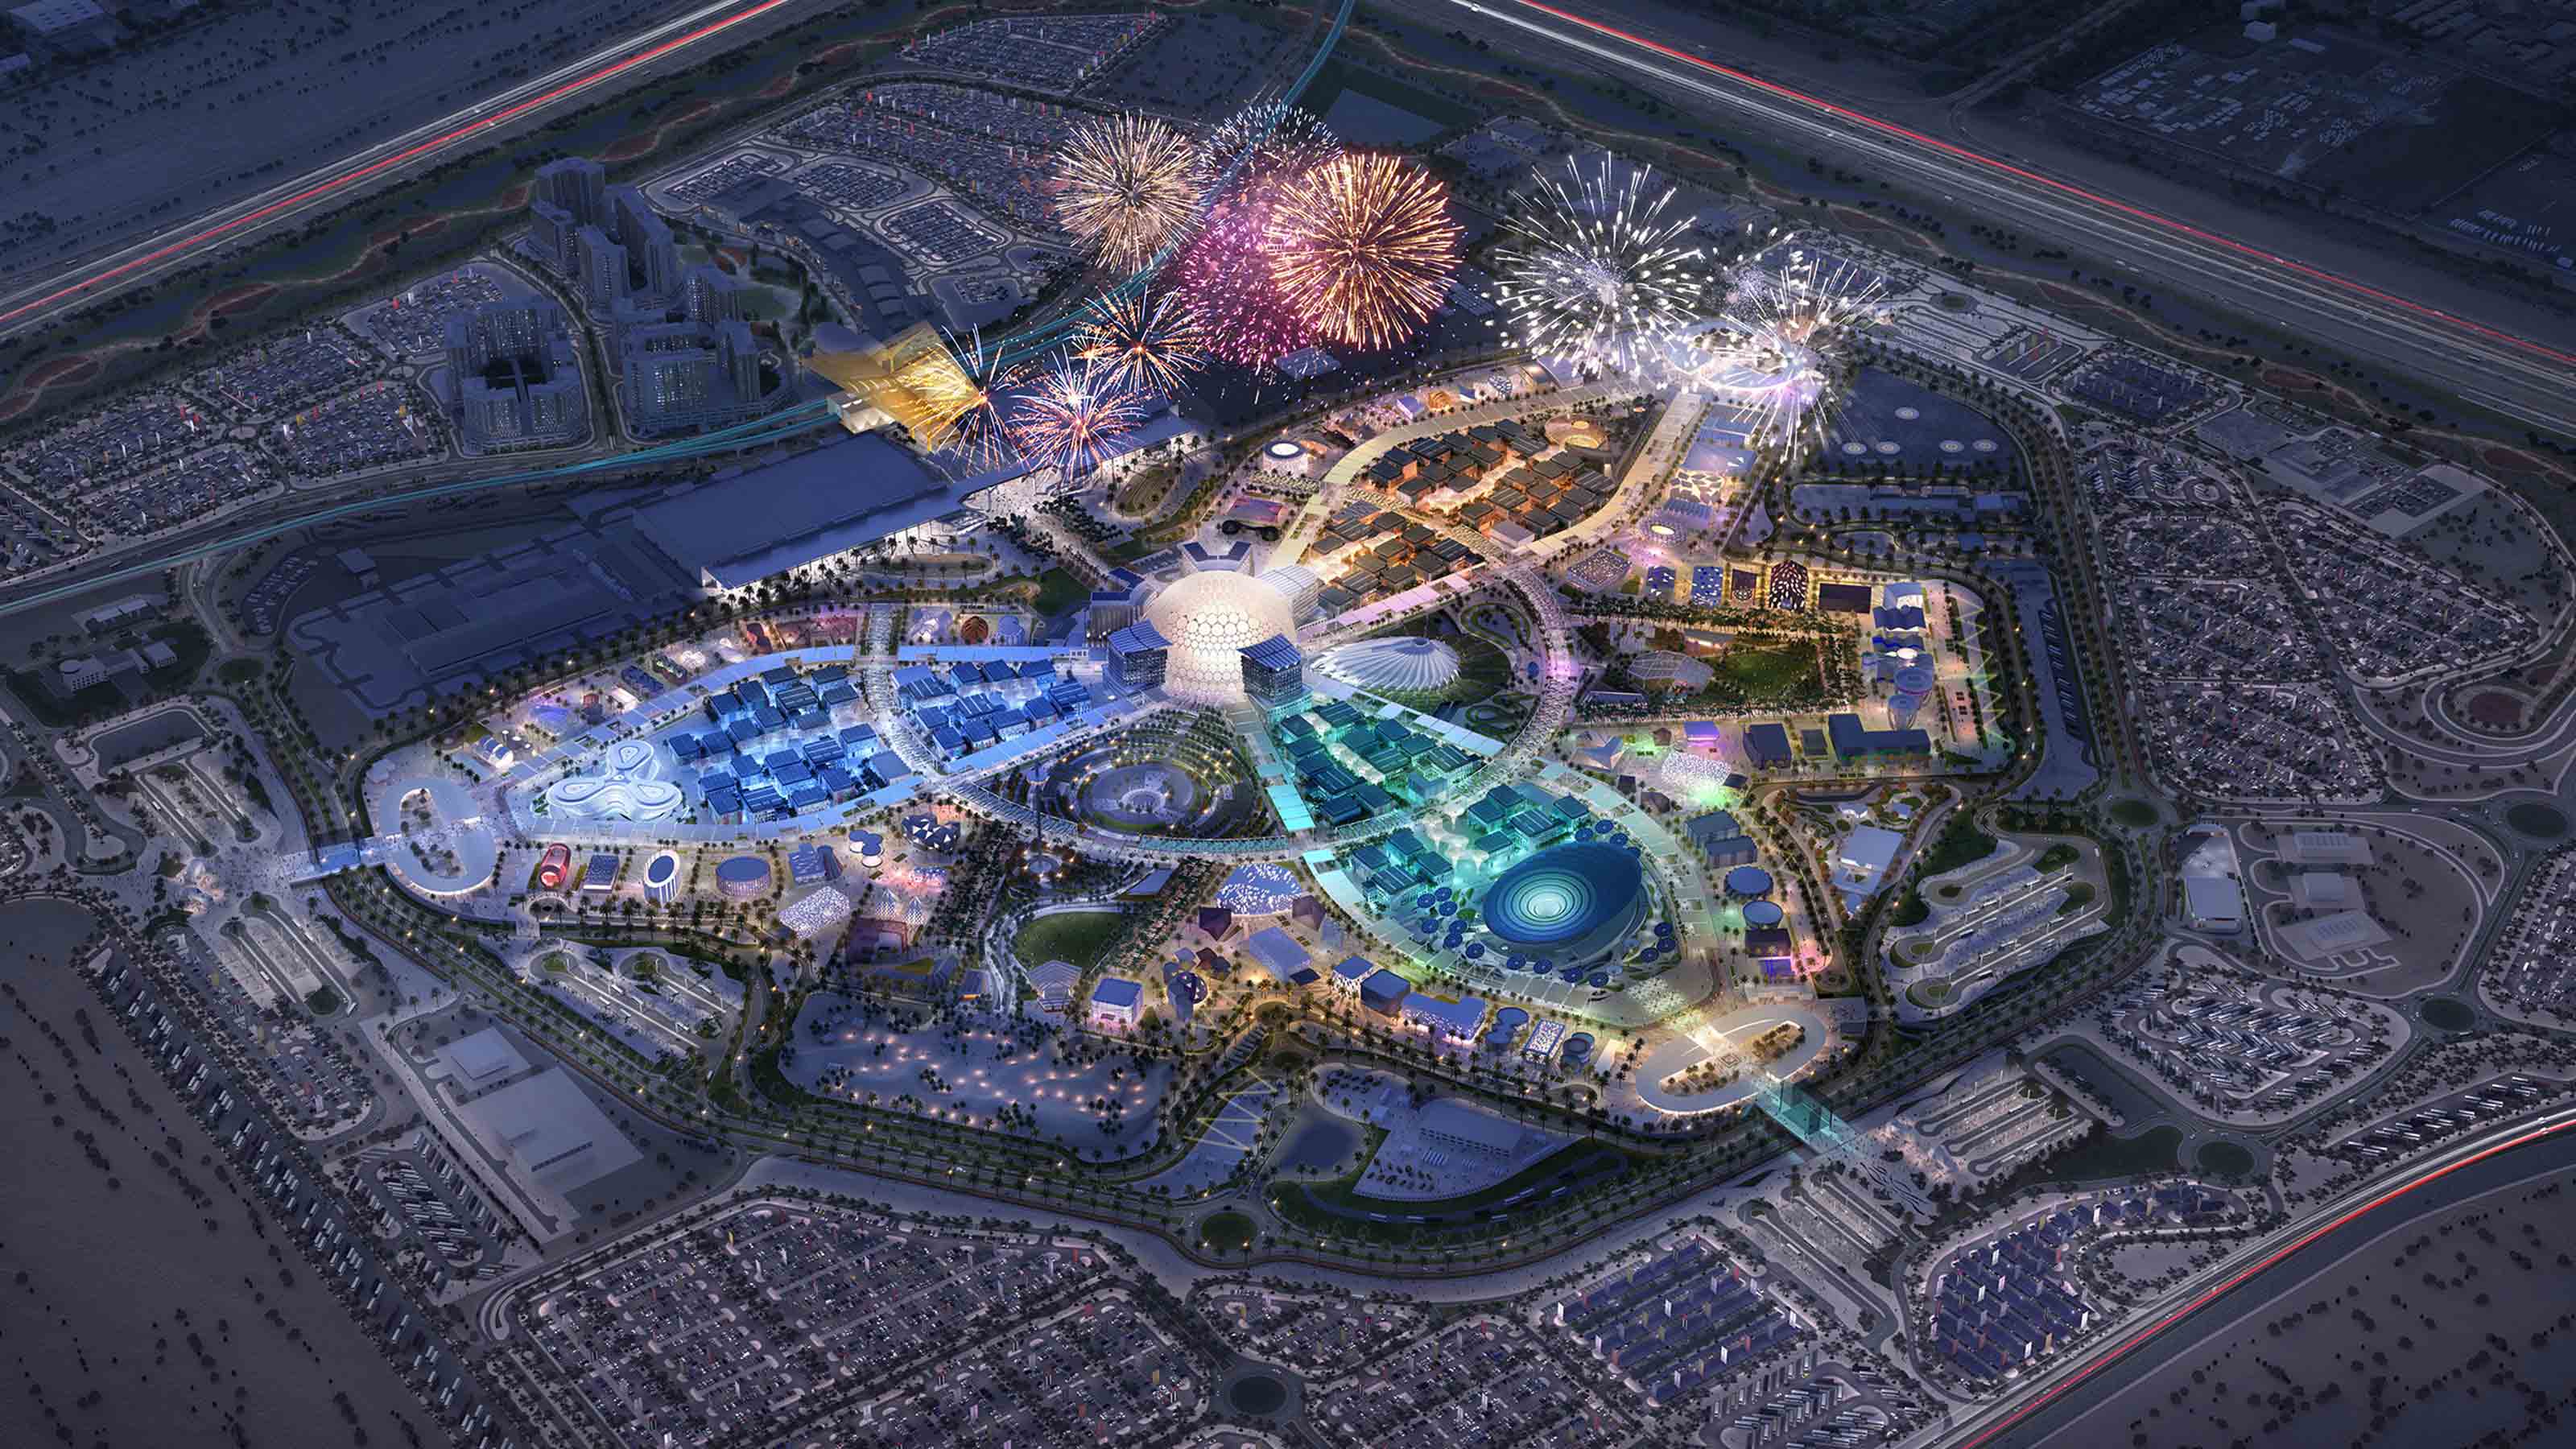 Nighttime Ariel View of Dubai's World Expo 2020